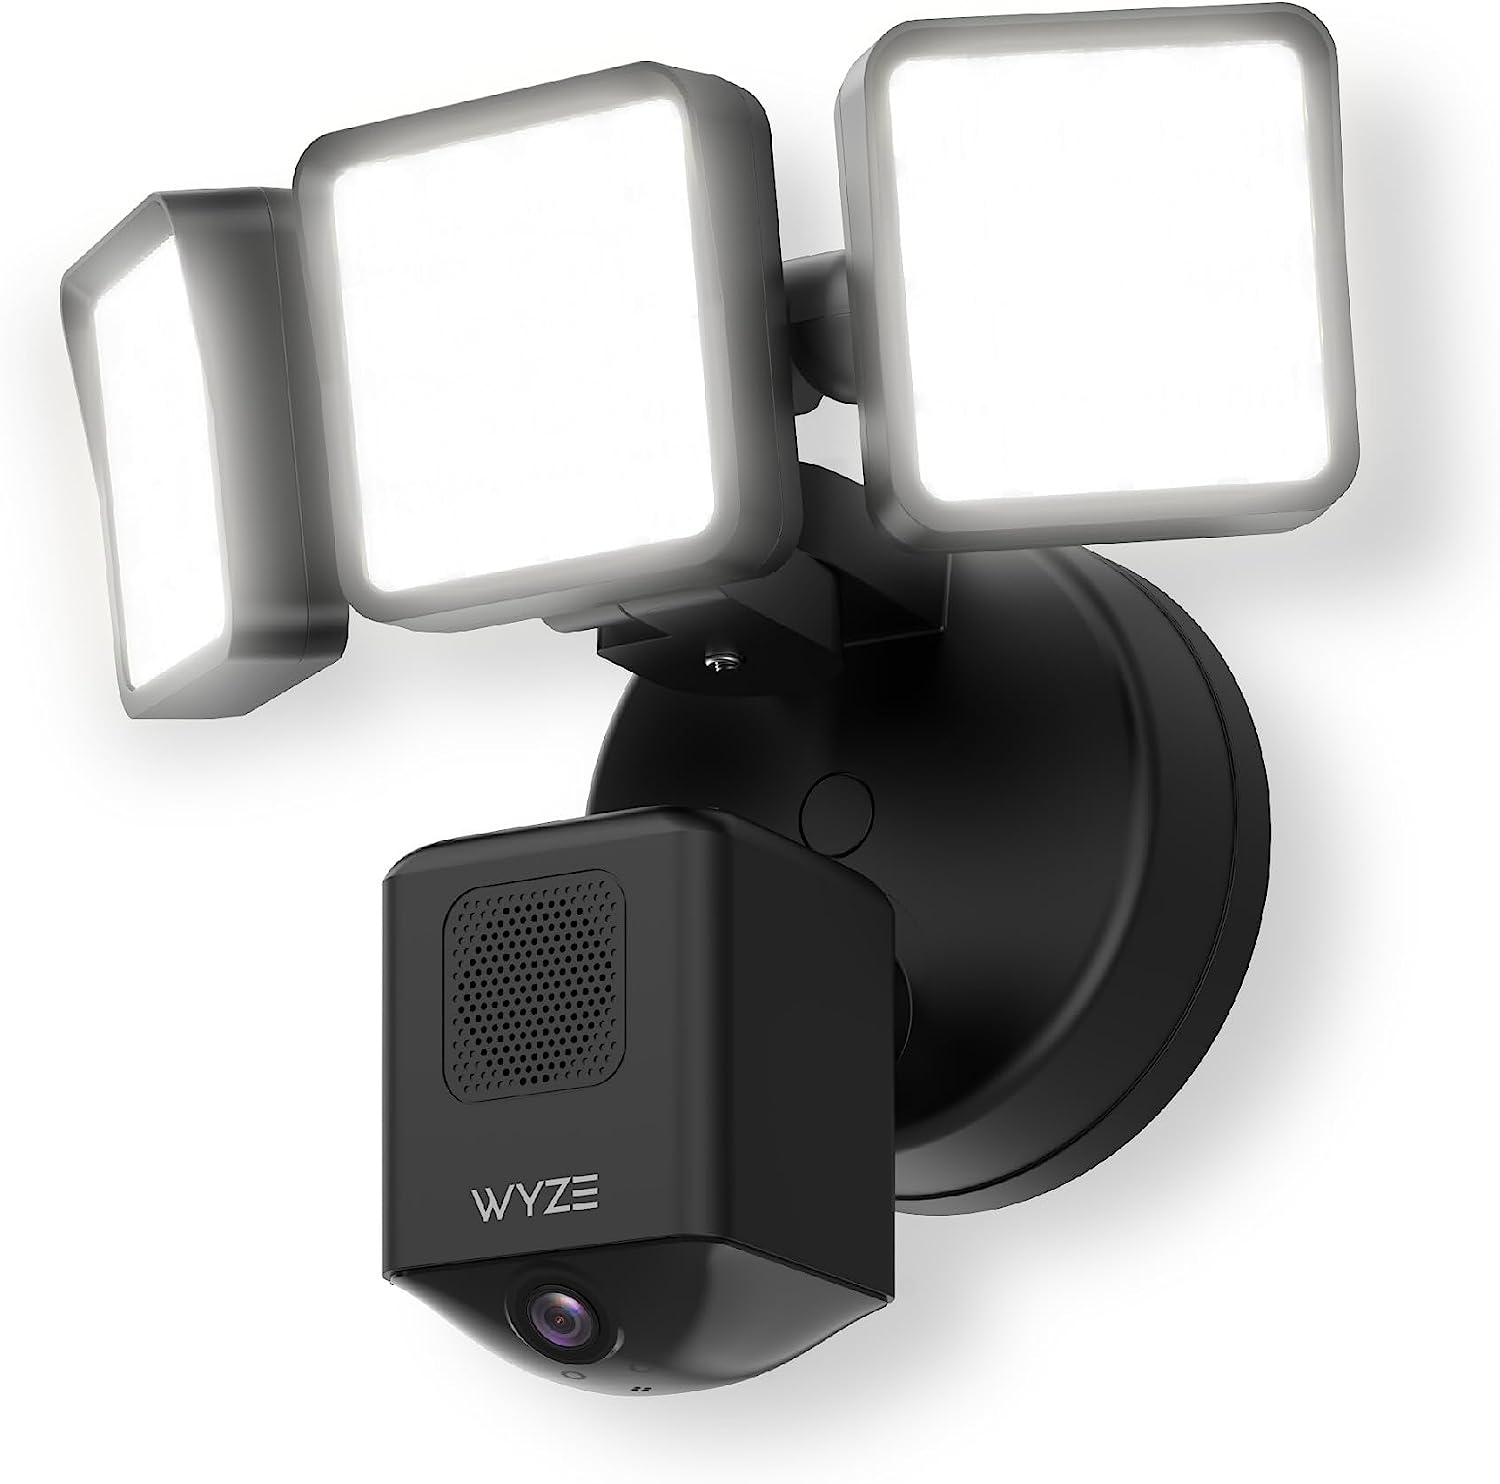 WYZE Floodlight Camera Pro 33% off $99